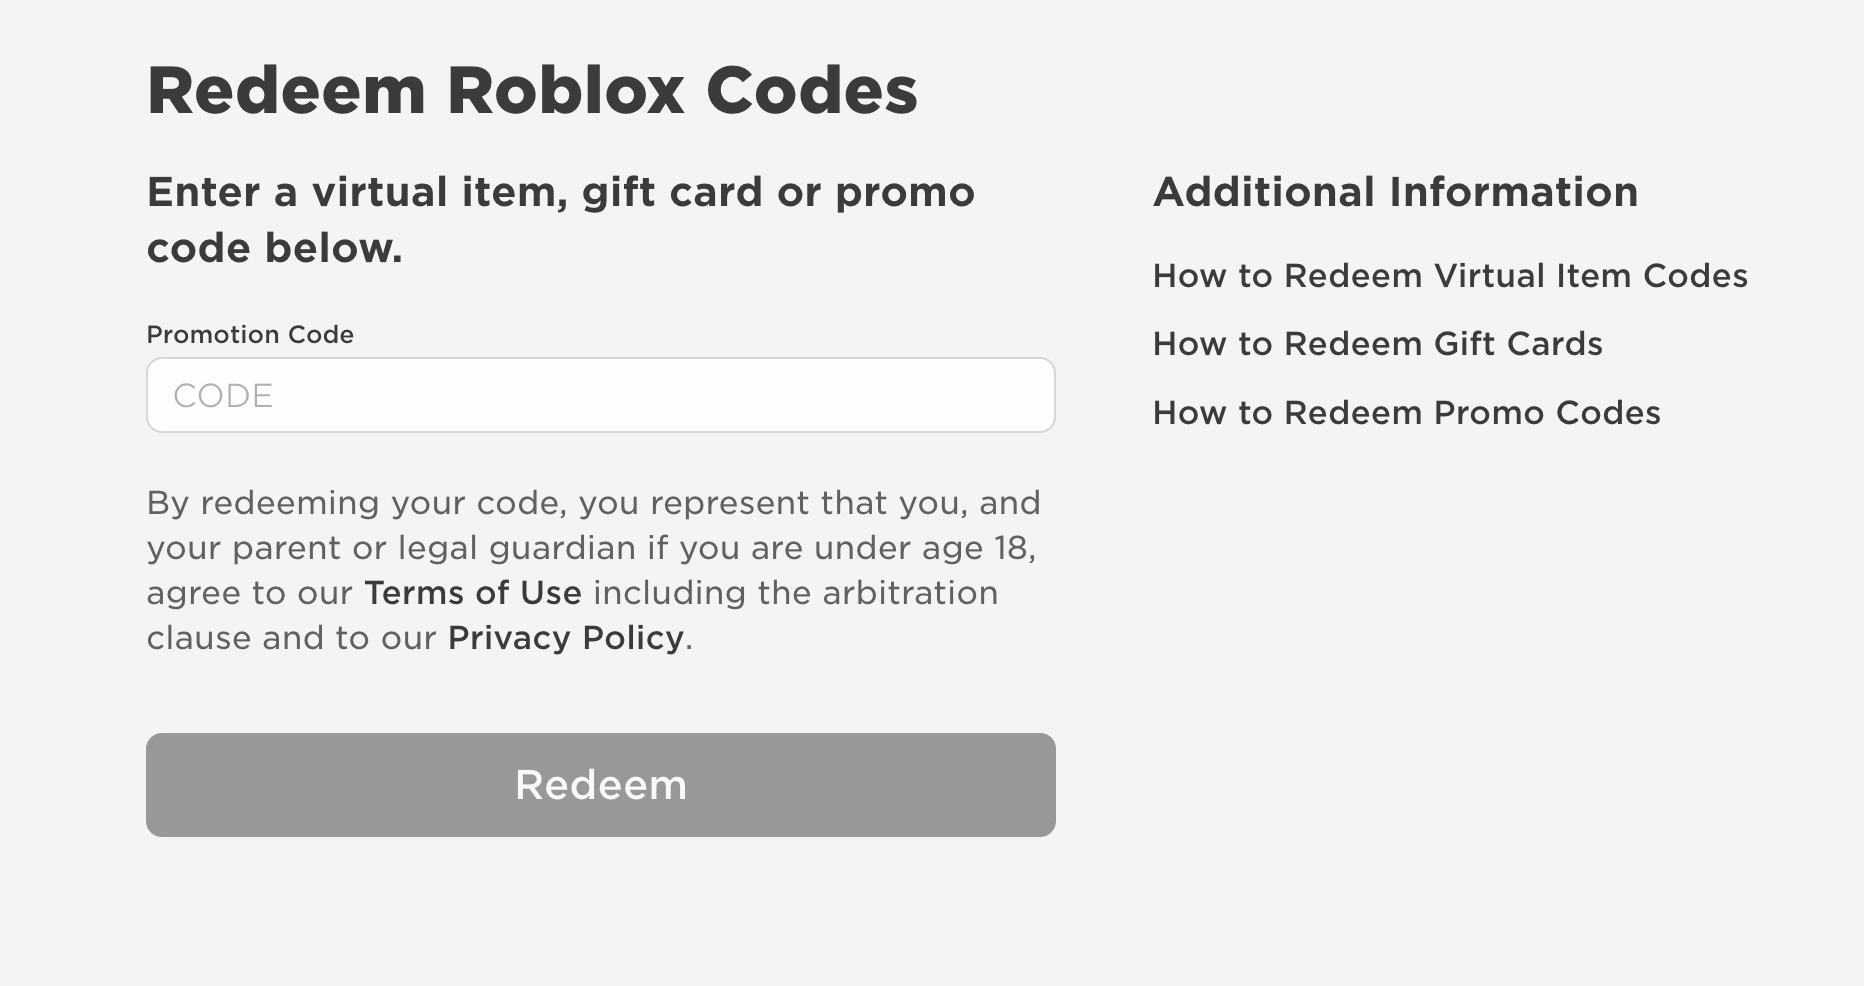 Roblox promocodes. Redeem Roblox codes. Roblox Promo codes redeem. Roblox.com/redeem. Как найти код в роблоксе